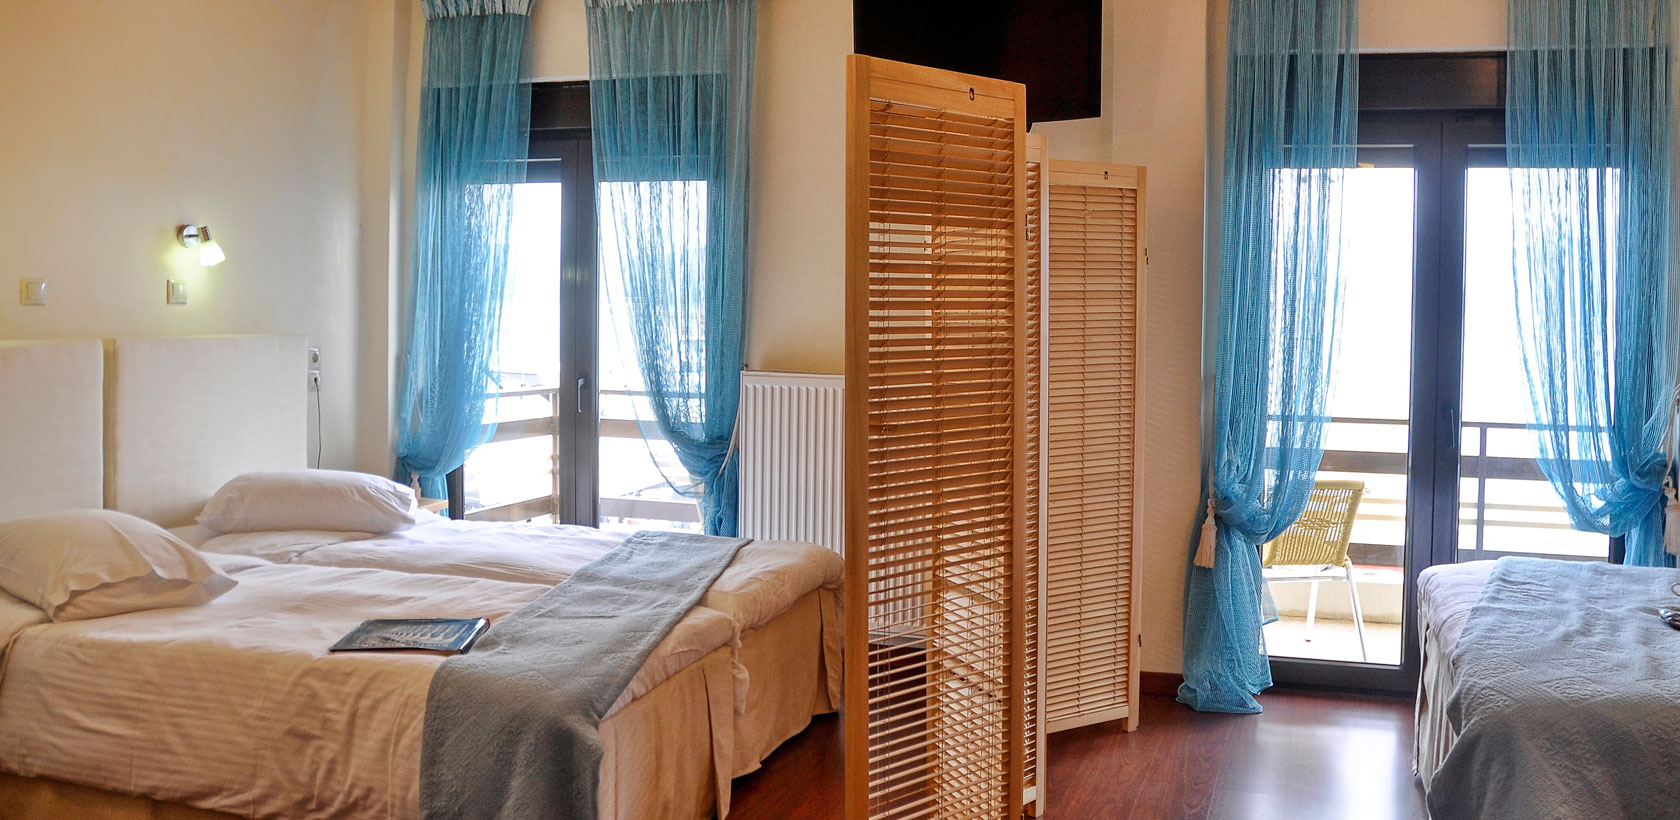 Corfu Accommodation - Family Room